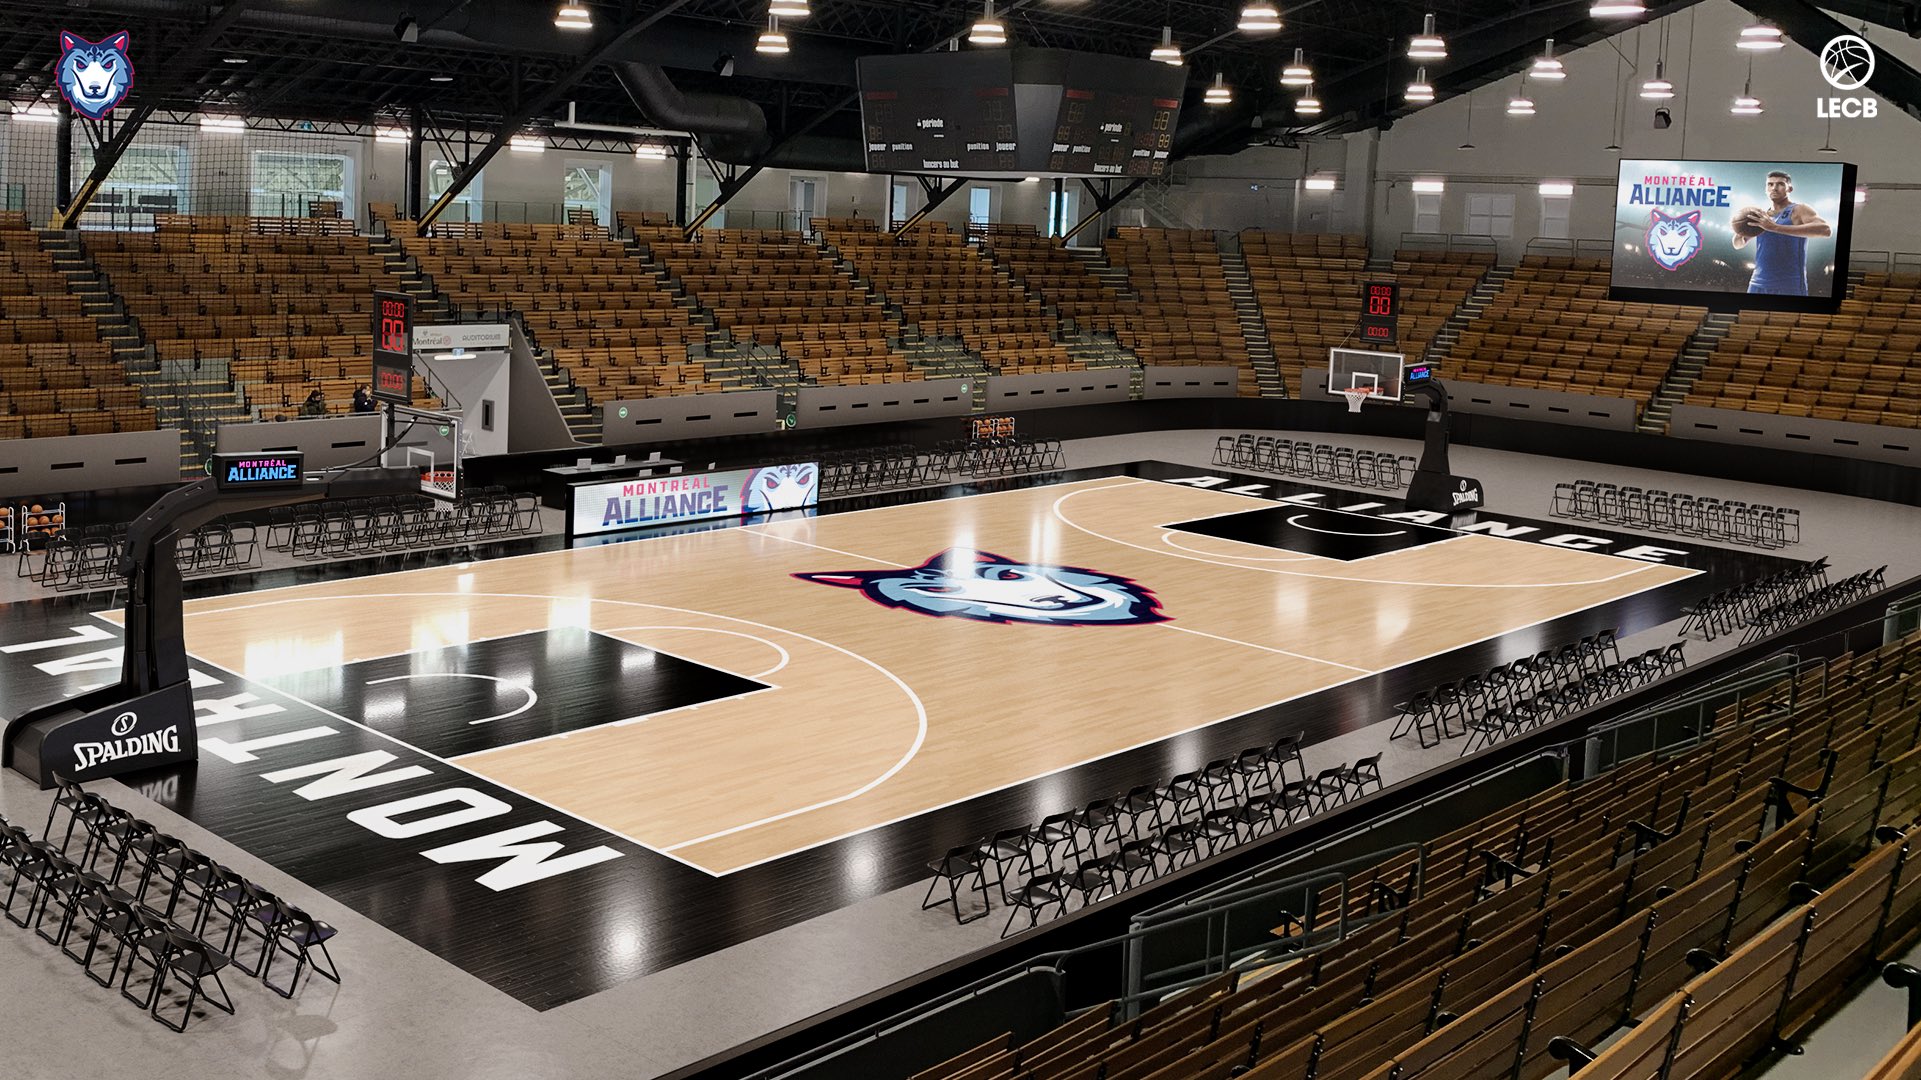 Montreal Alliance Verdun Auditorium basketball arena